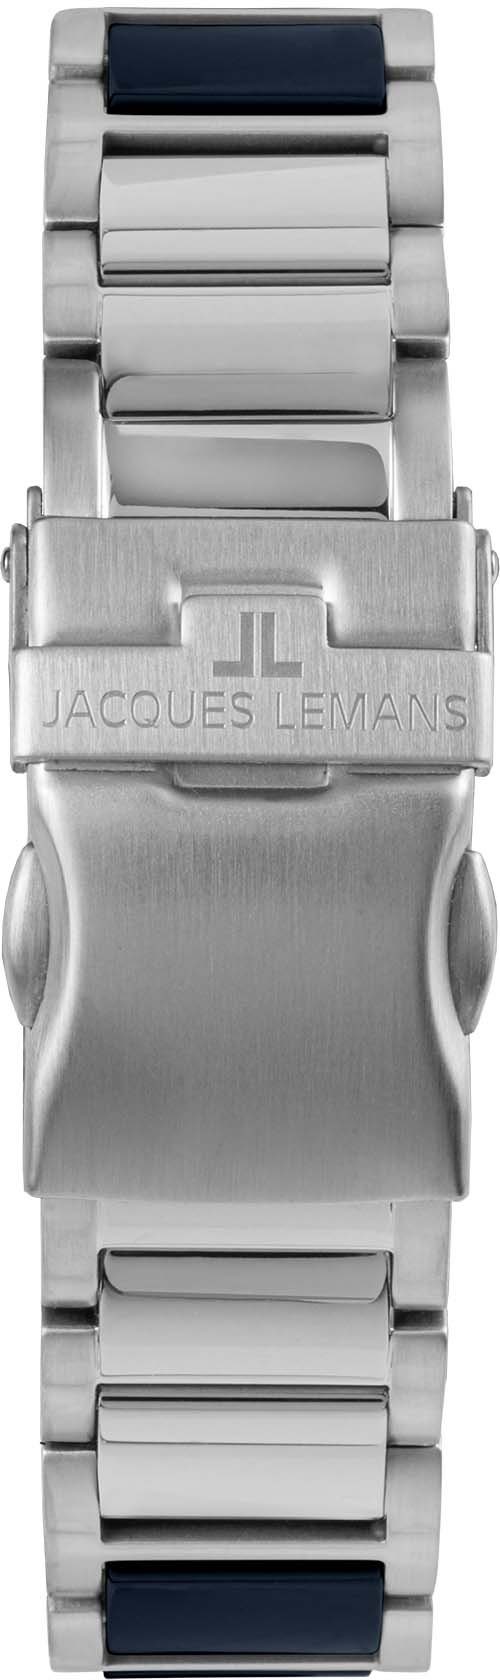 Jacques Lemans Keramikuhr Liverpool, 42-10B